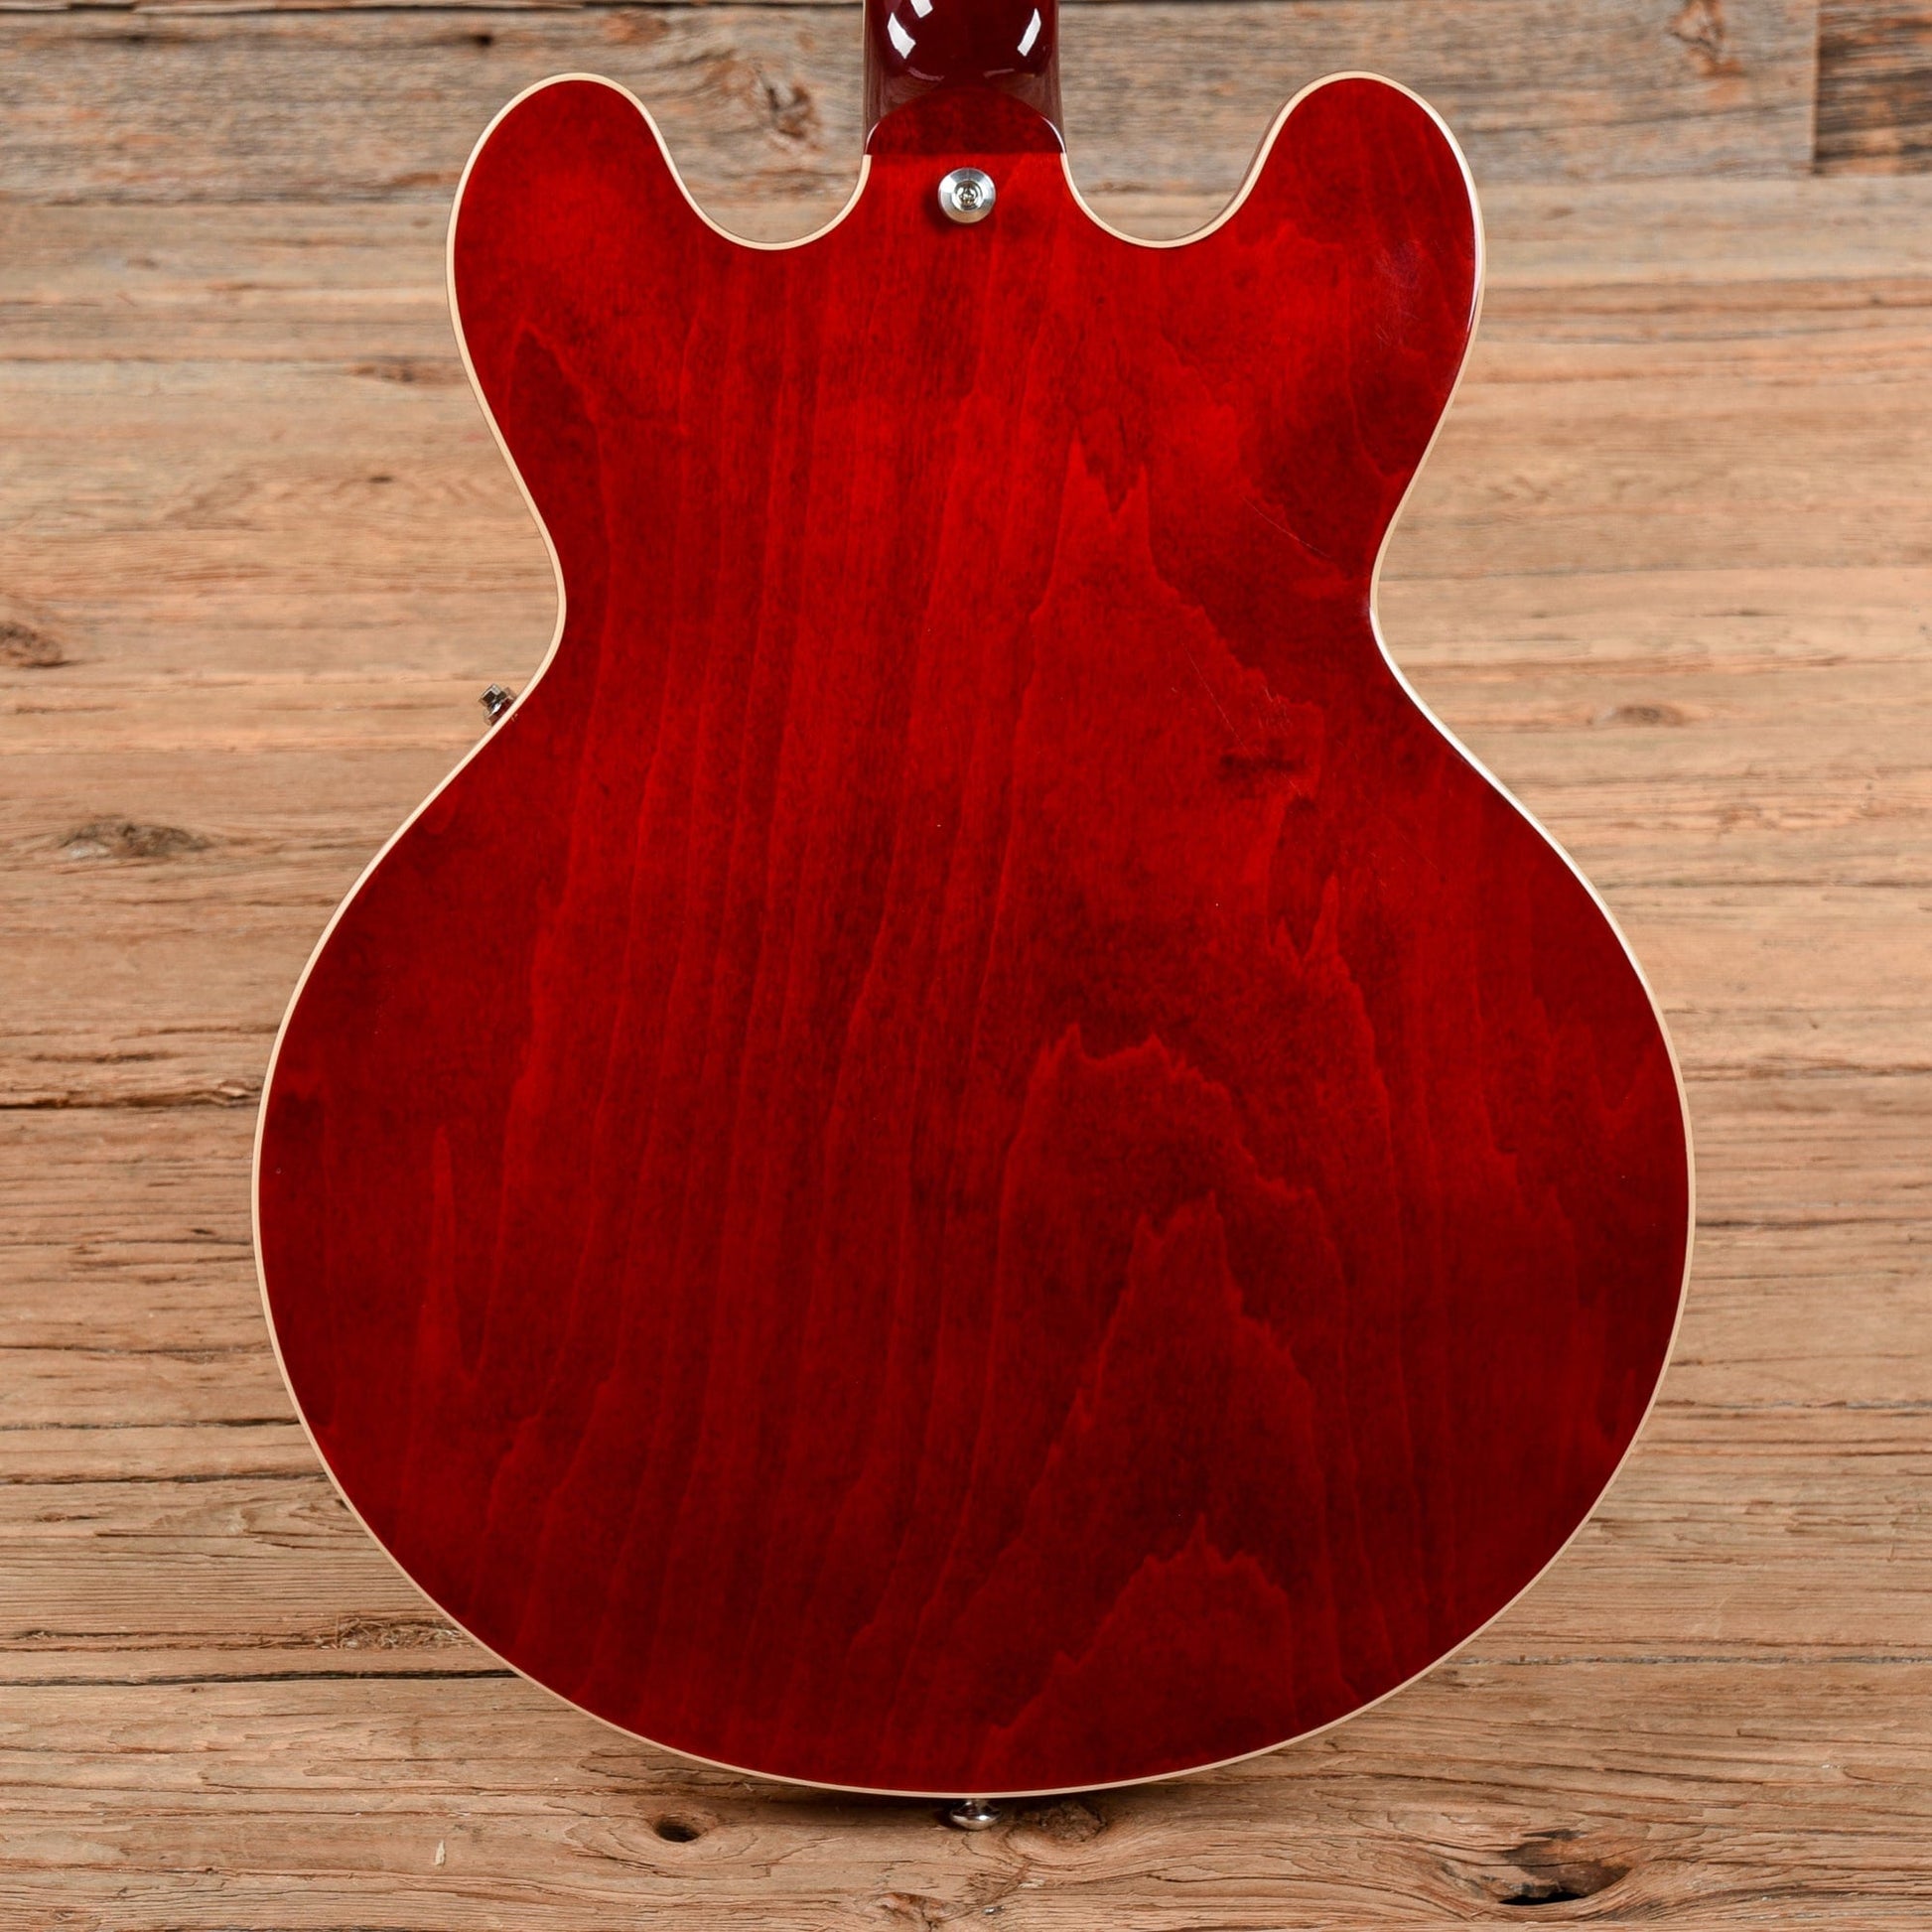 Gibson ES-335 Dot Cherry 2021 Electric Guitars / Semi-Hollow